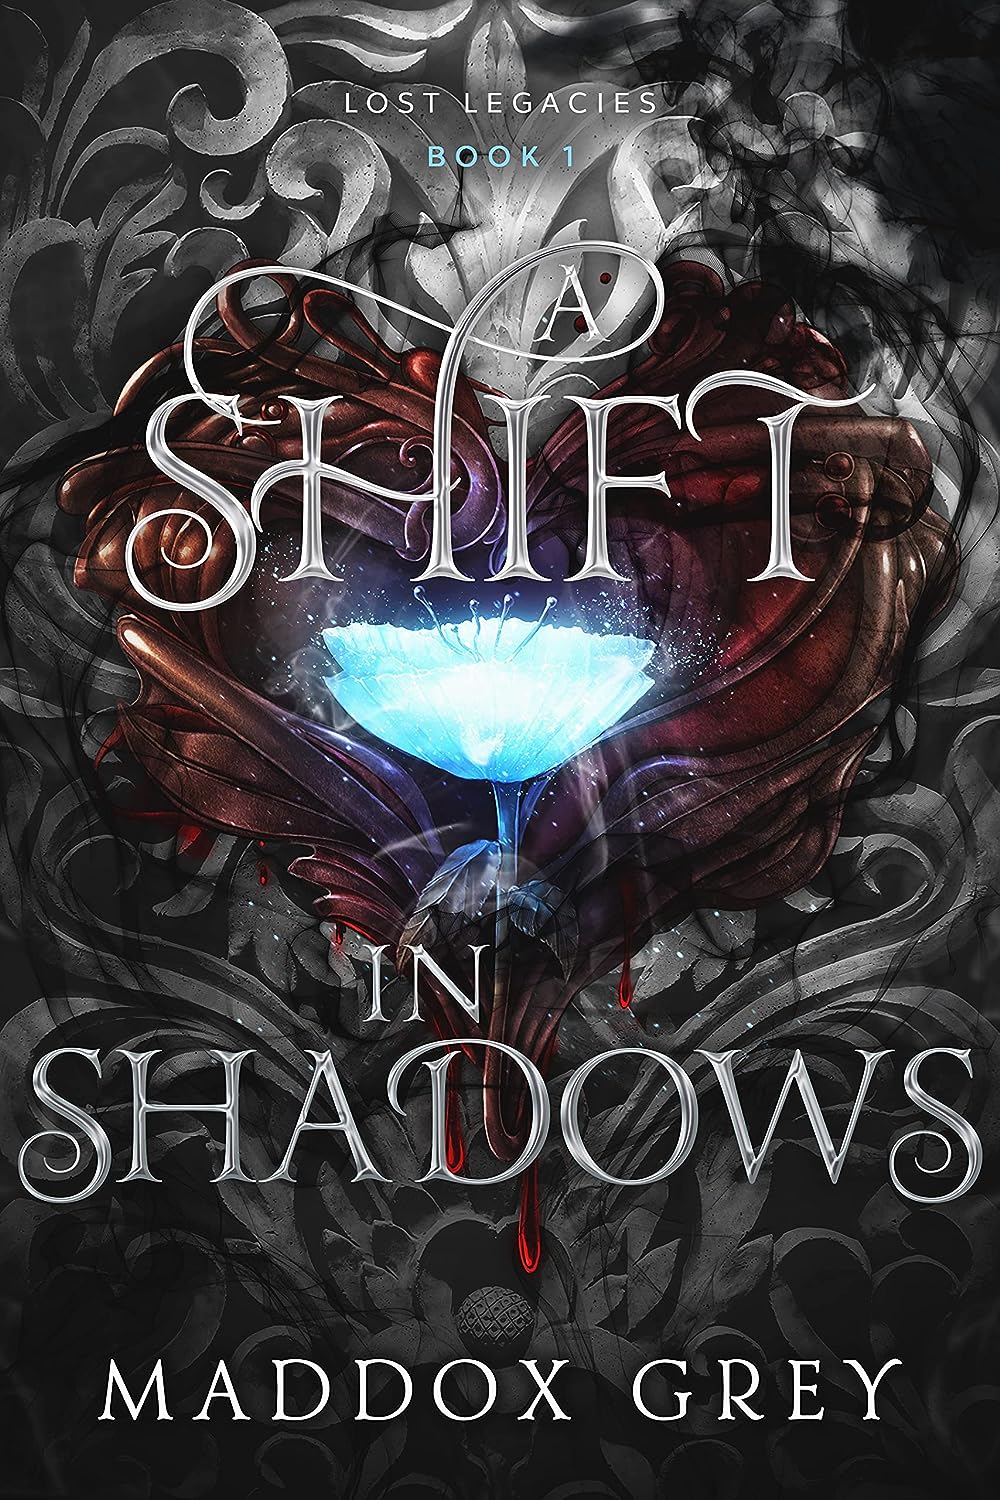 Lost Legacies 1 - A Shift in Shadows